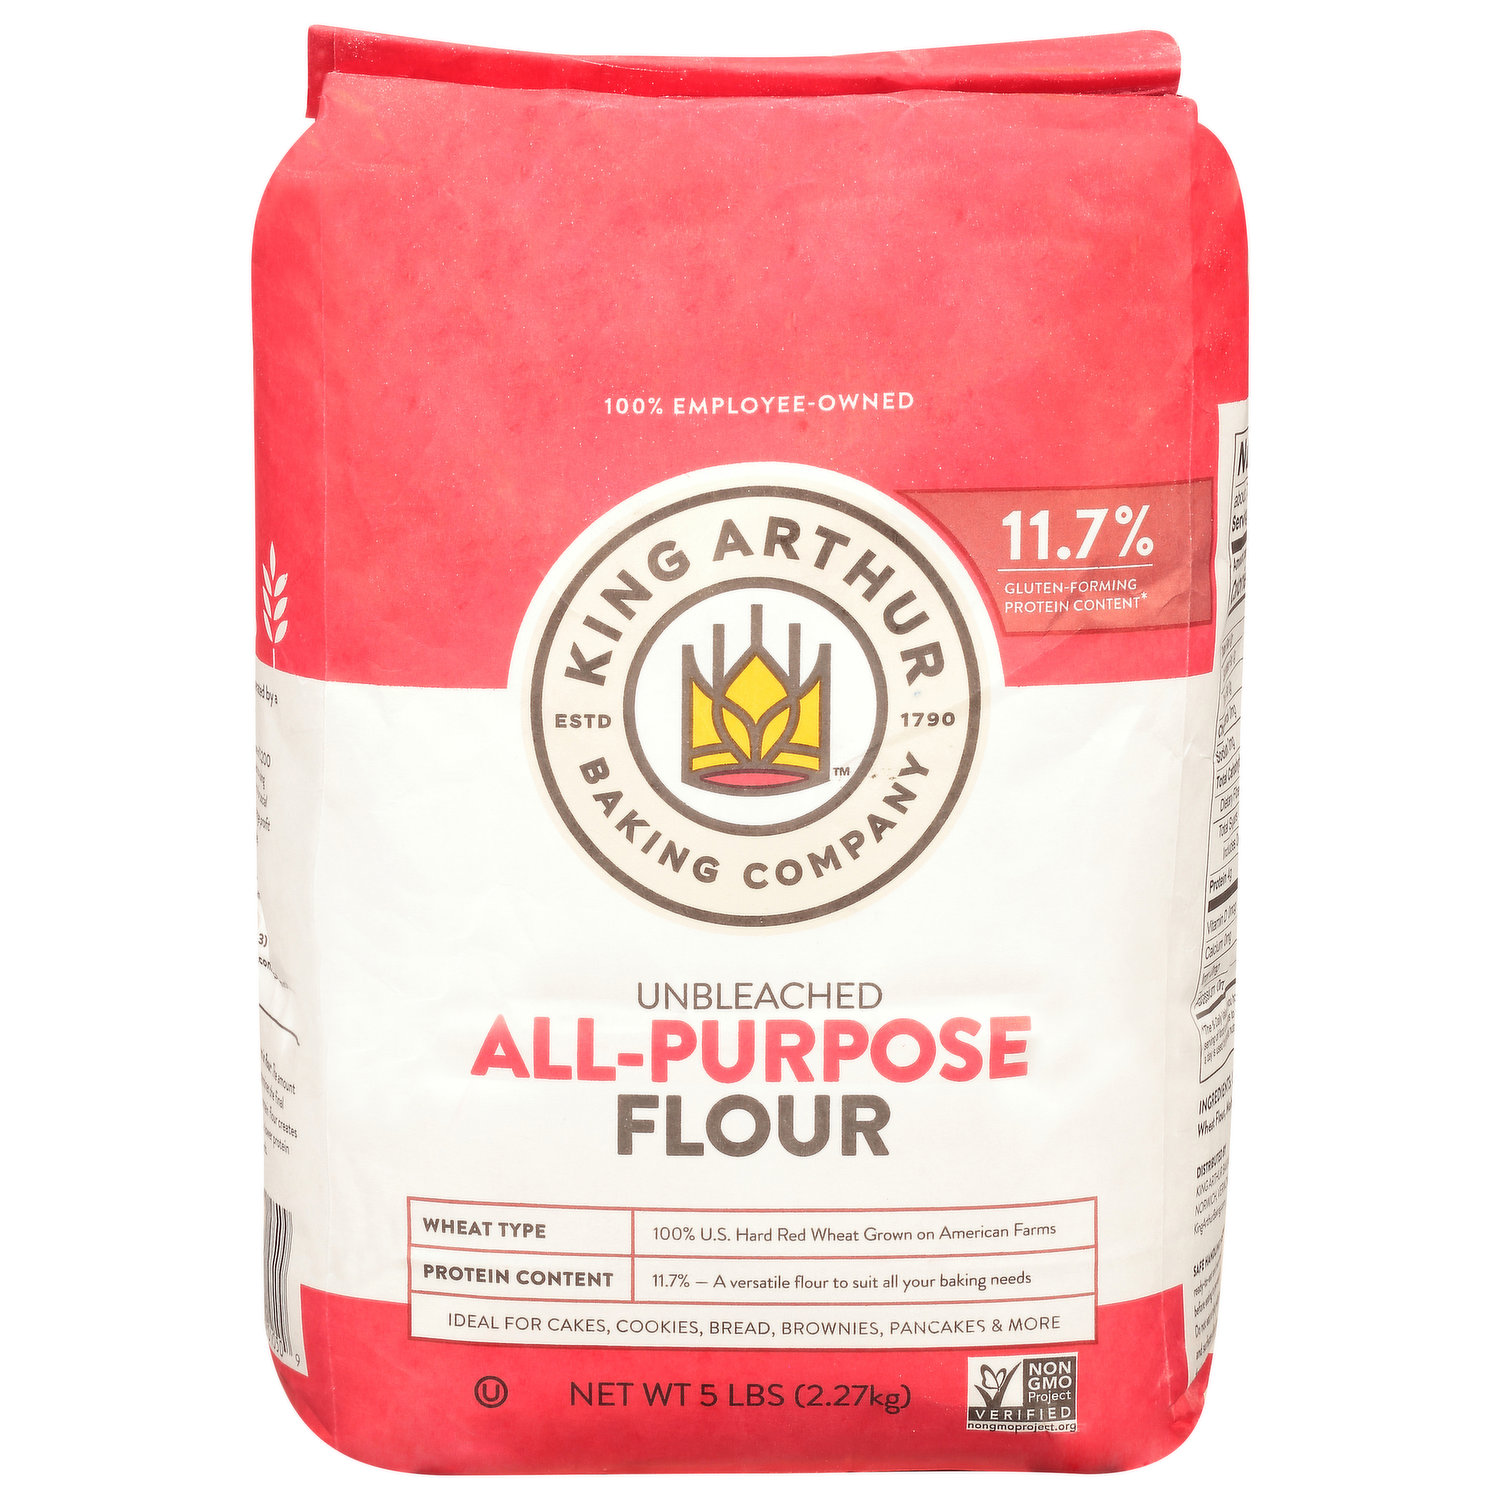 Flour Scoop - King Arthur Baking Company